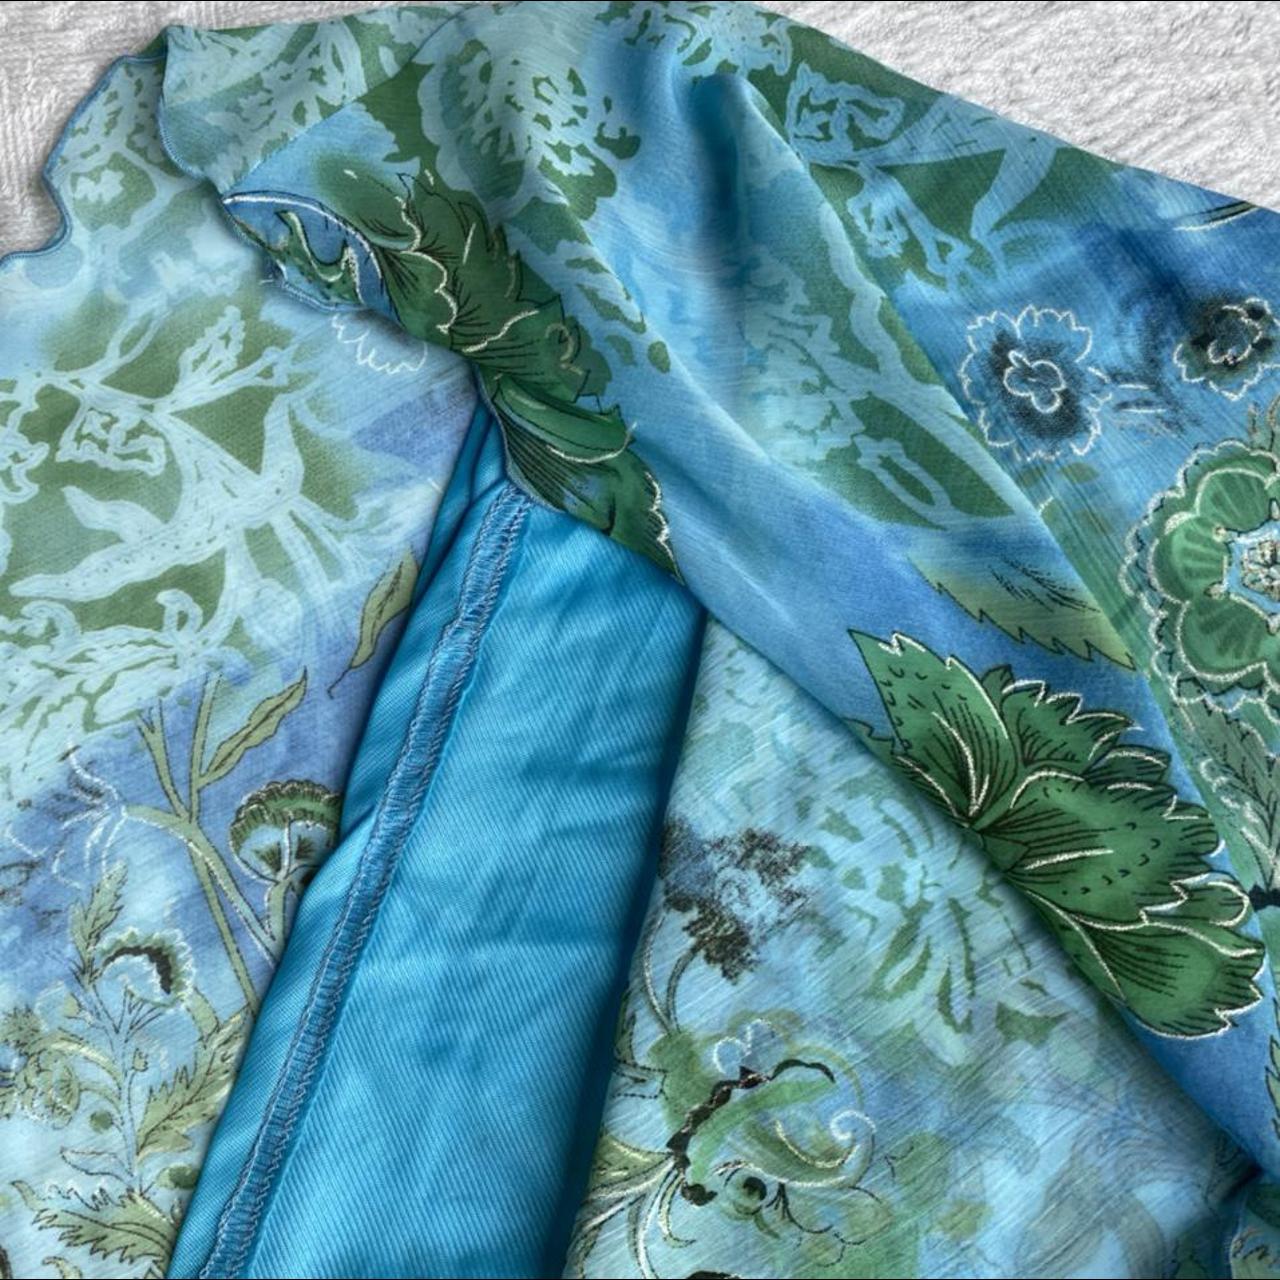 Unreal chiffon overlay midi skirt 🌺 blue and green... - Depop